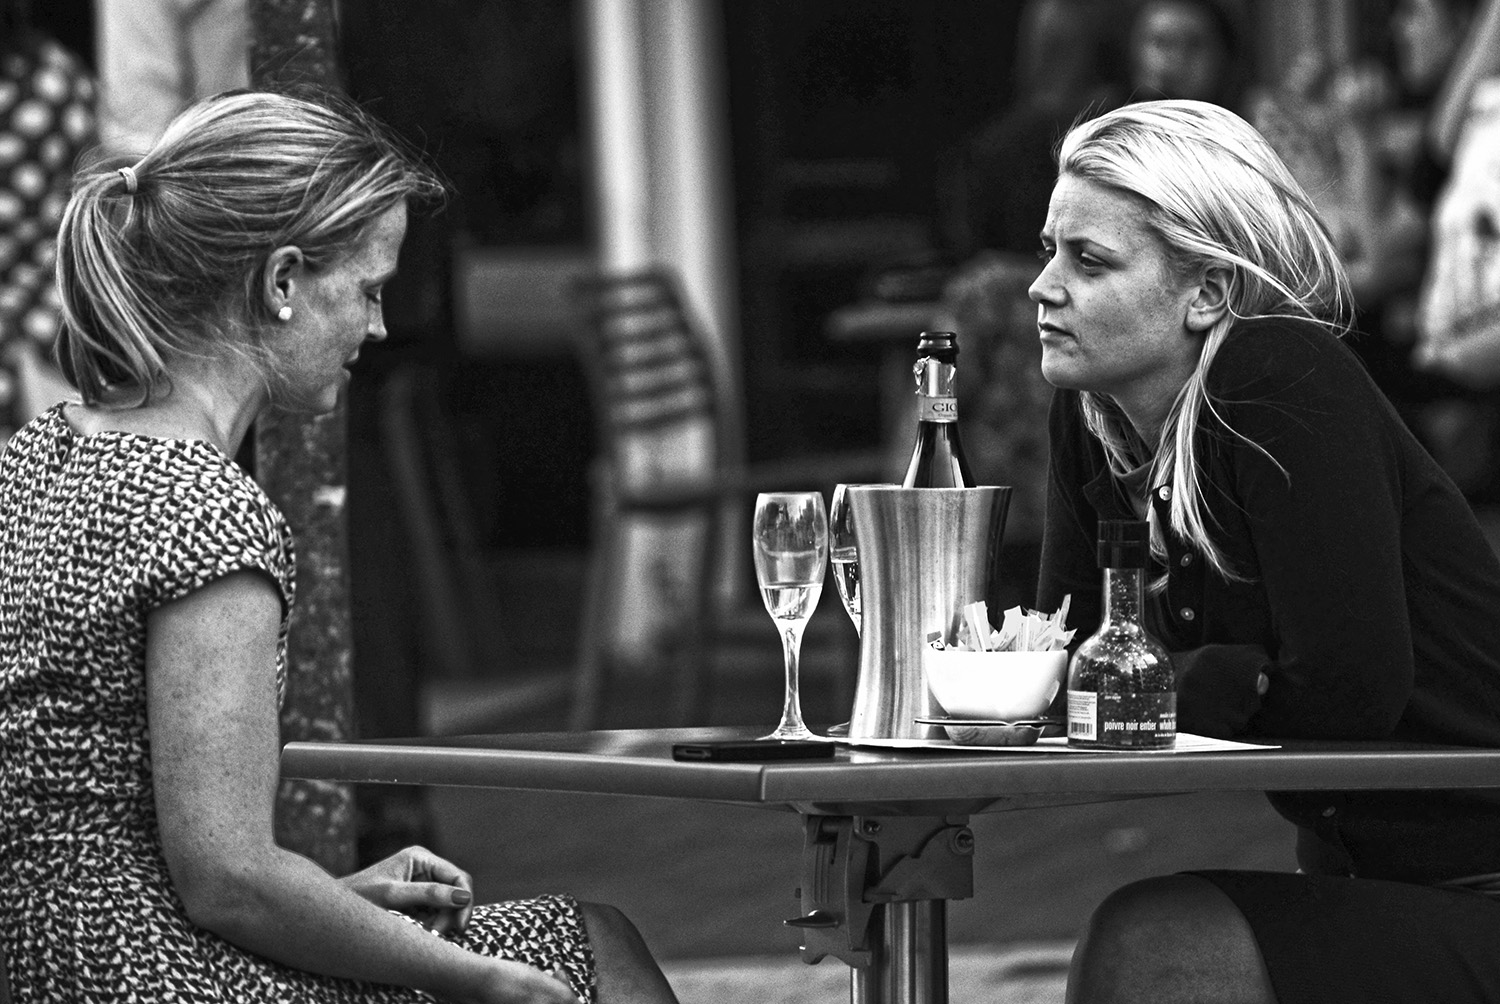 Women_Lunch_Conversation_Sharing_Intimacies_London_England_Black-and-White.jpg